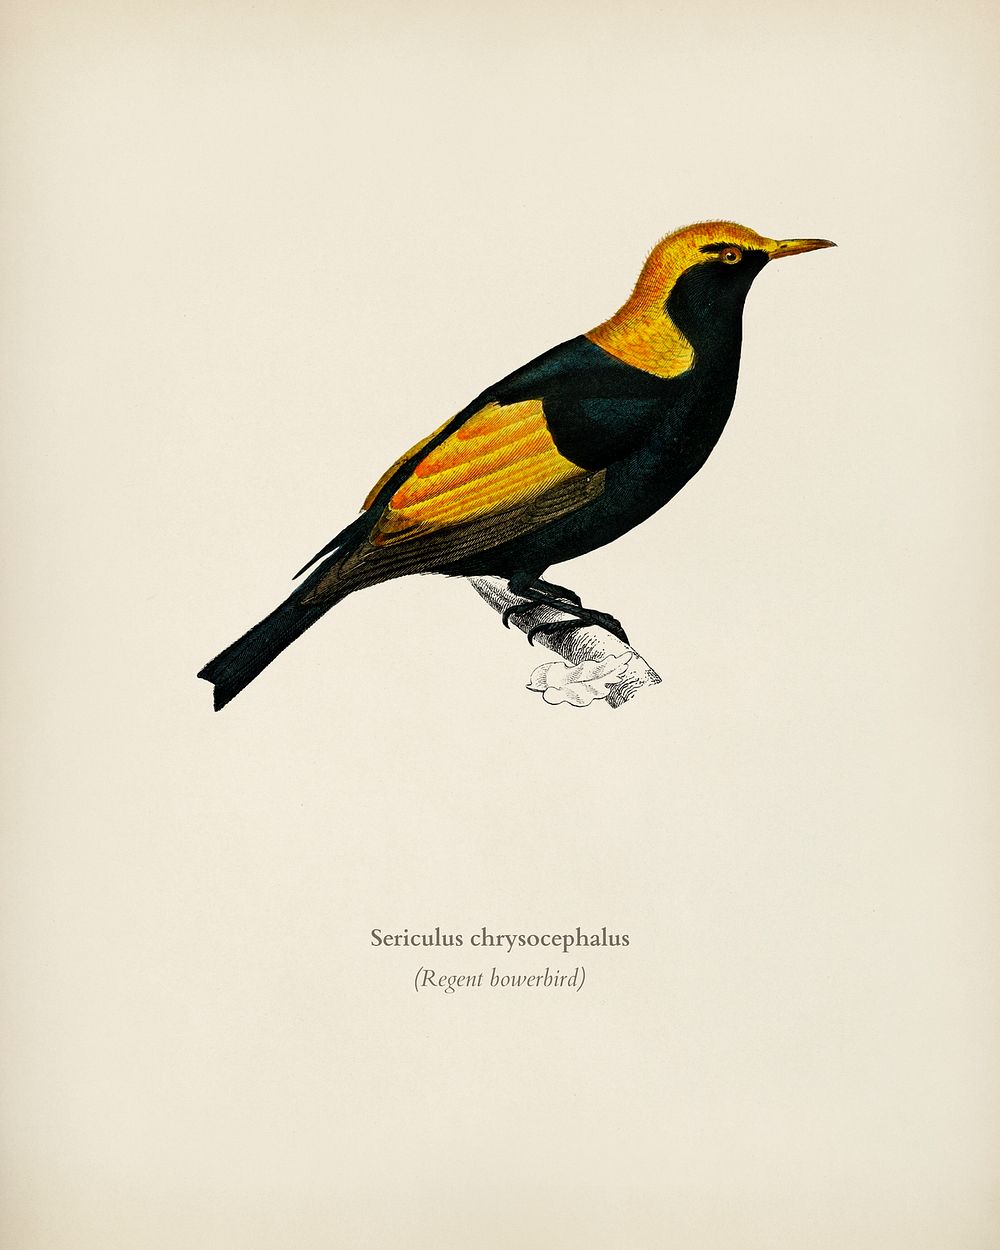 Regent bowerbird (Sericulus chrysocephalus) illustrated by Charles Dessalines D' Orbigny (1806-1876). Digitally enhanced…